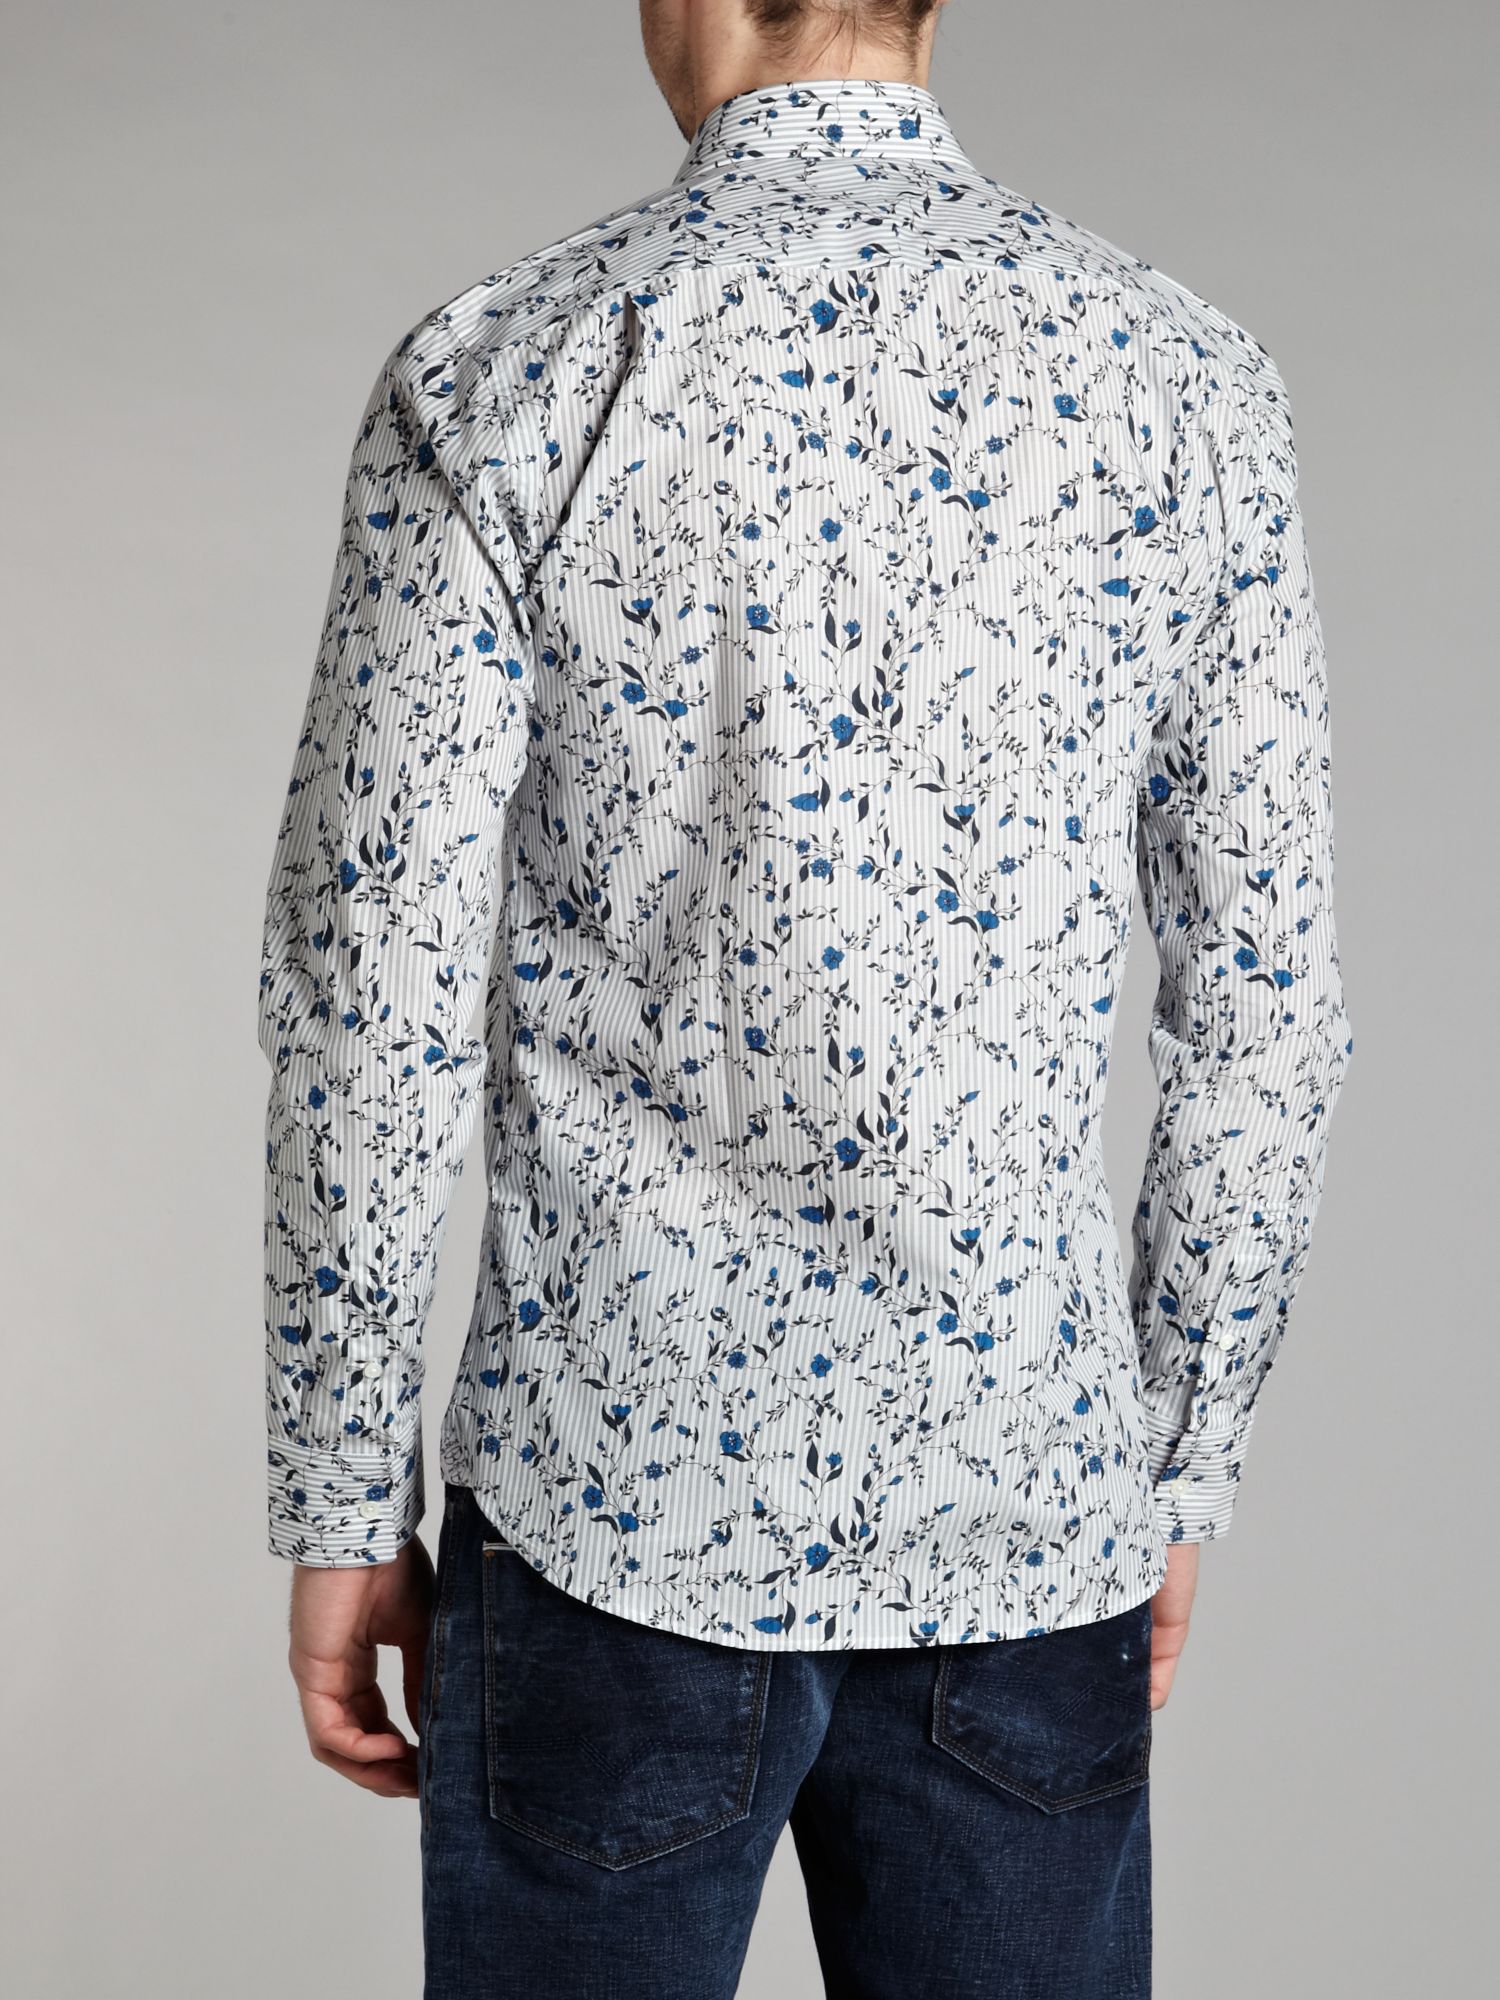 Ted Baker Long Sleeved Floral Print Formal Shirt in Blue for Men - Lyst